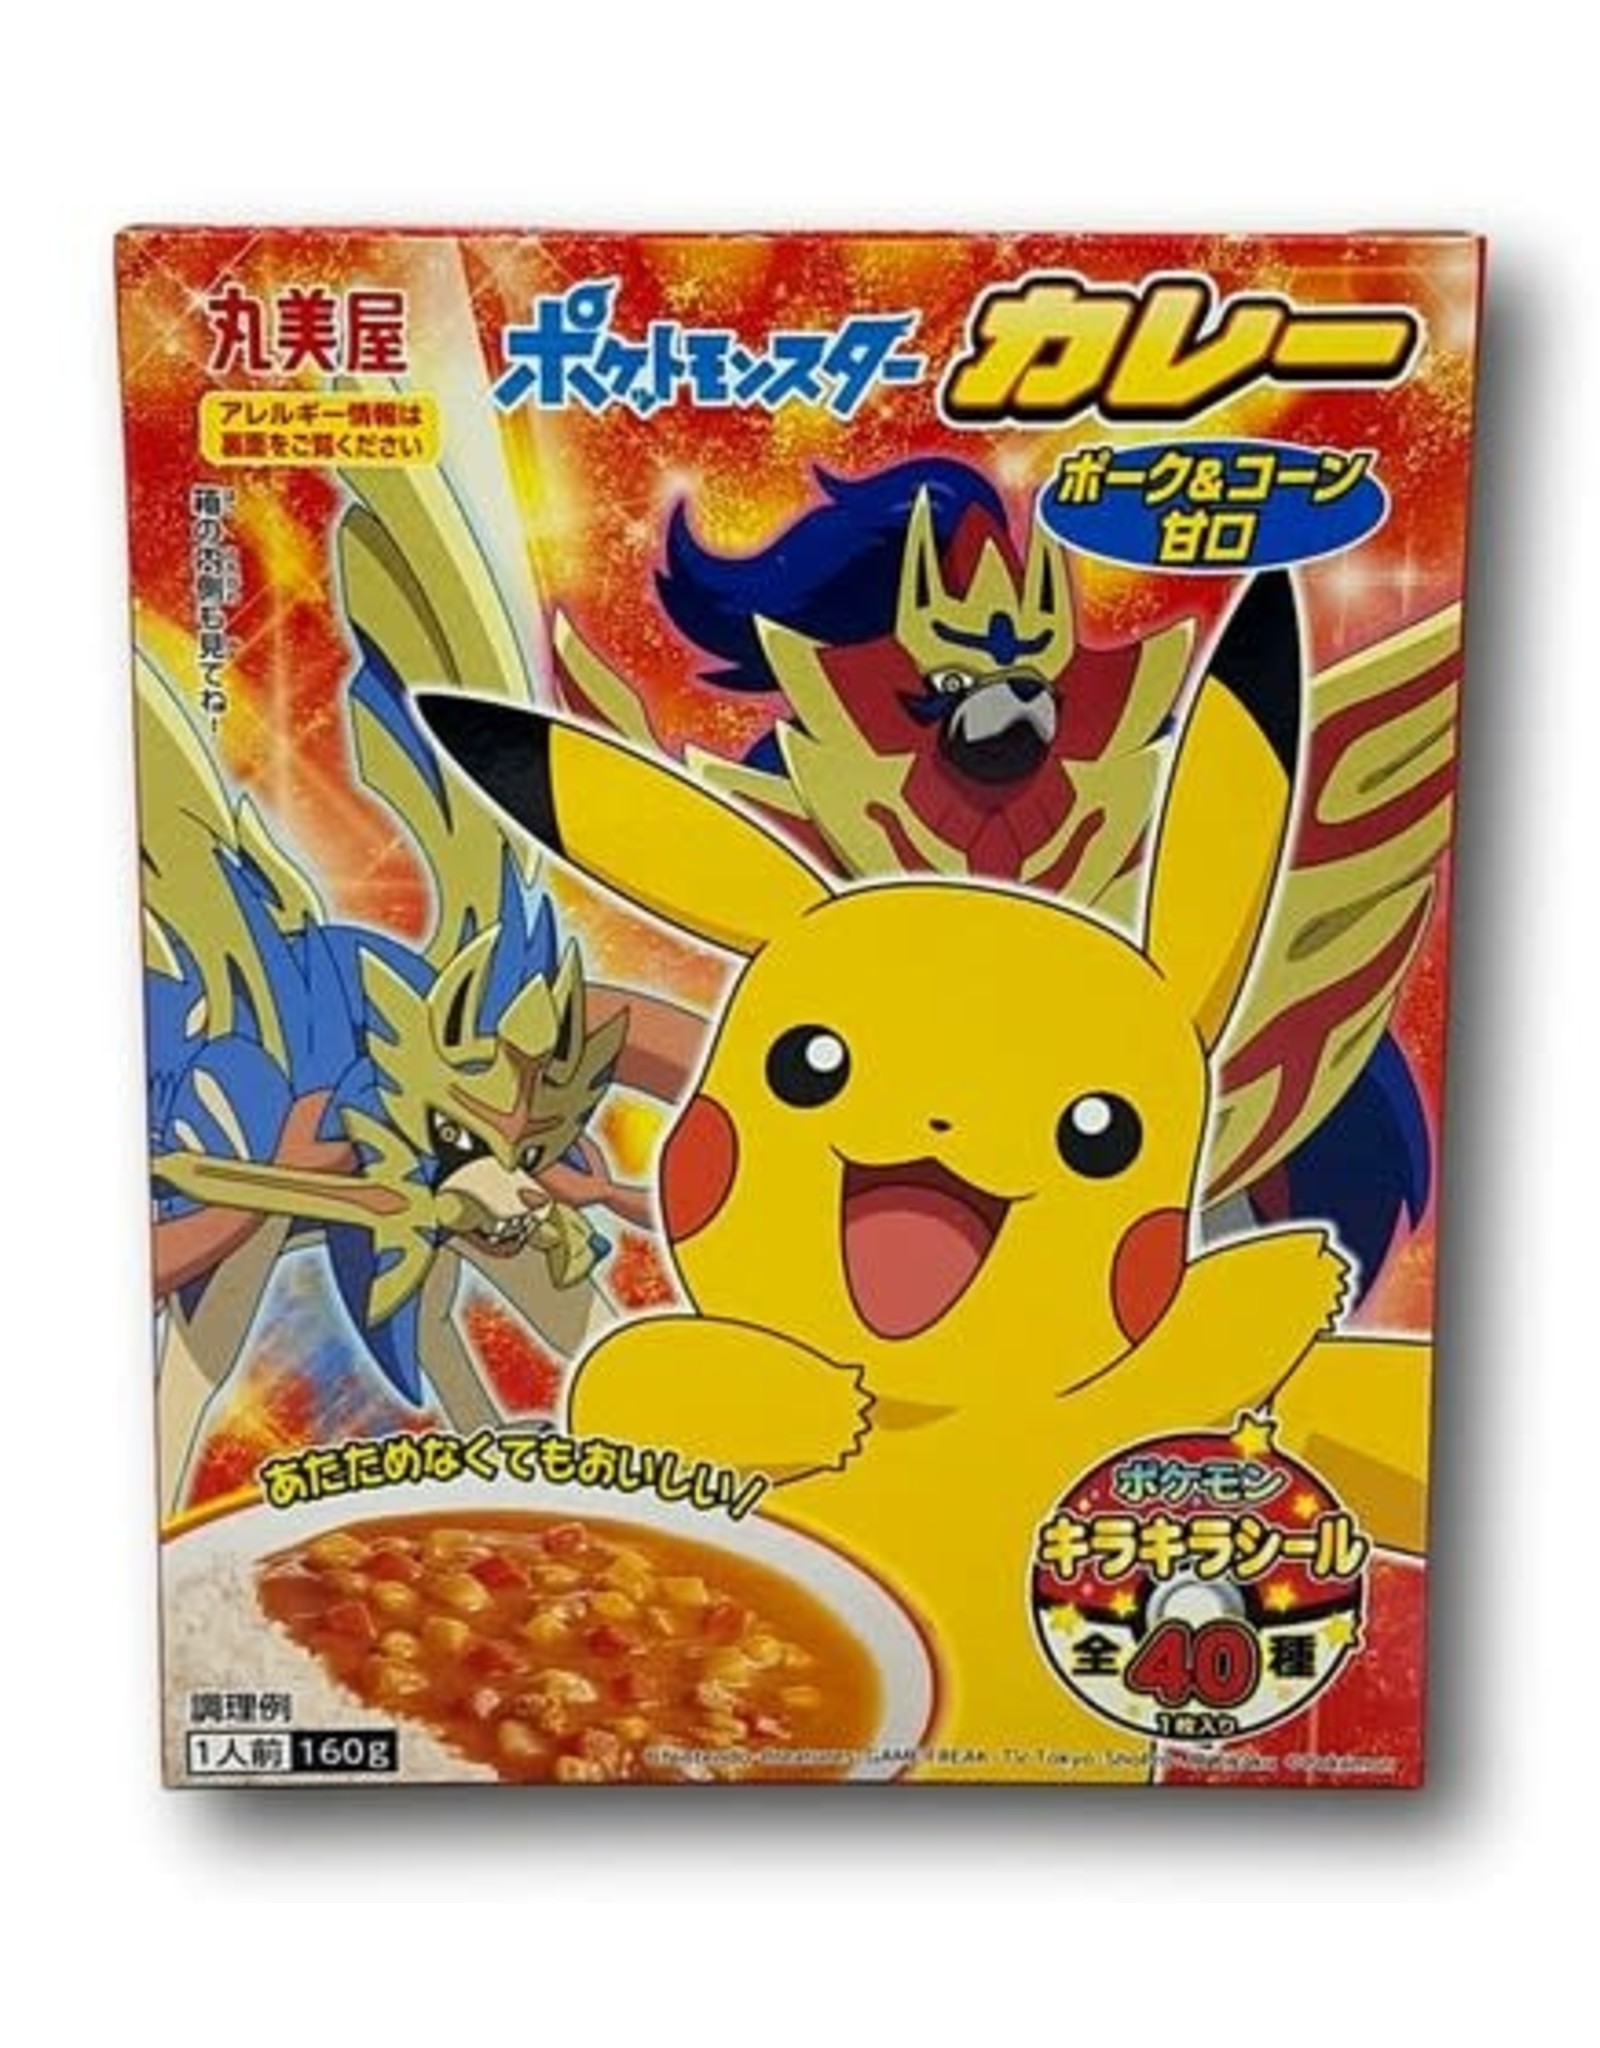 Pokémon Instant Curry - Pork & Corn - 160g